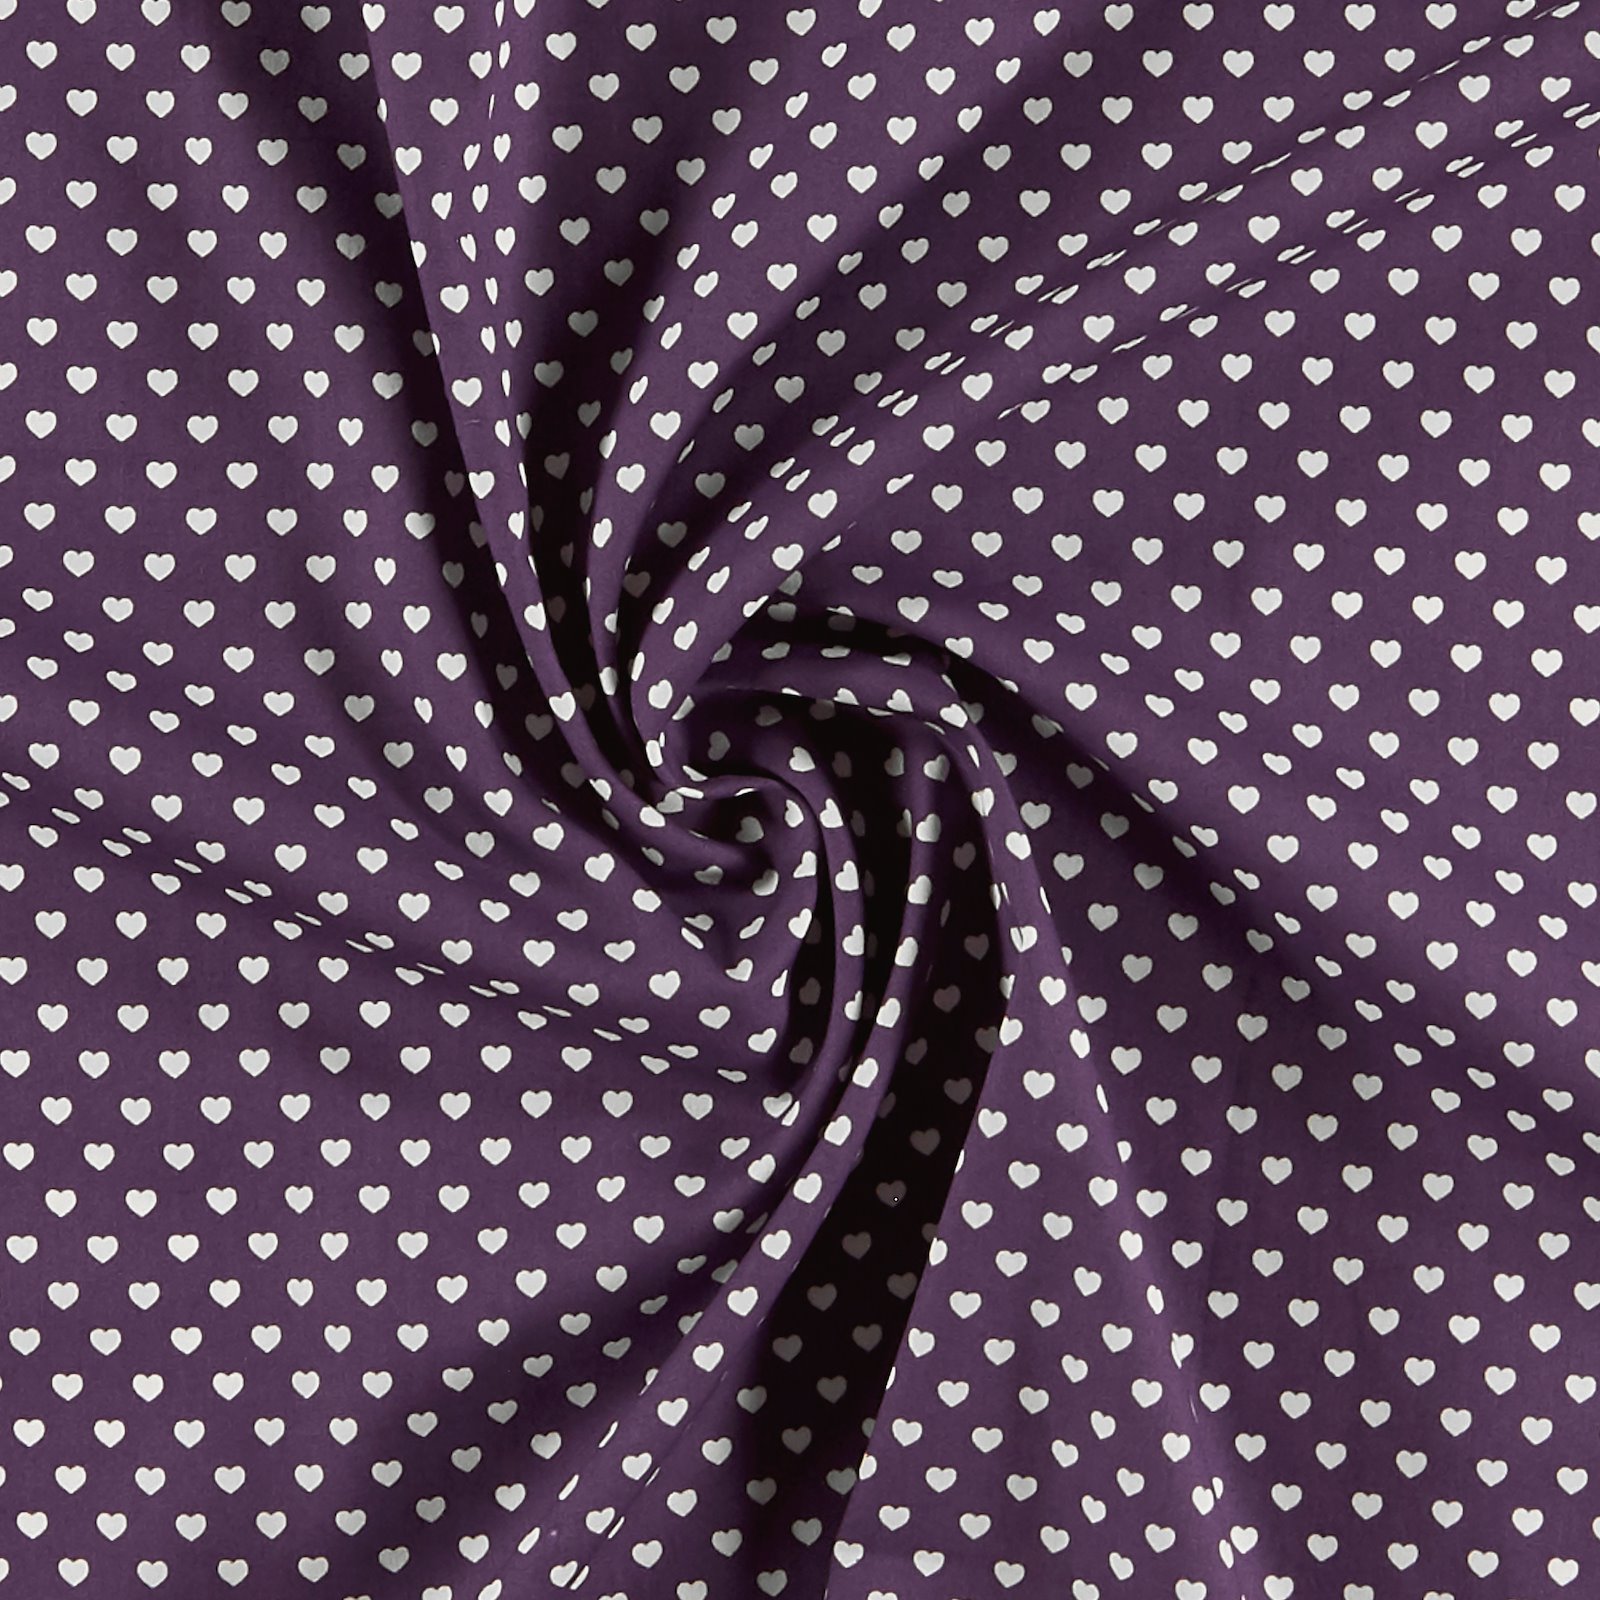 Woven cotton purple w white hearts 780923_pack